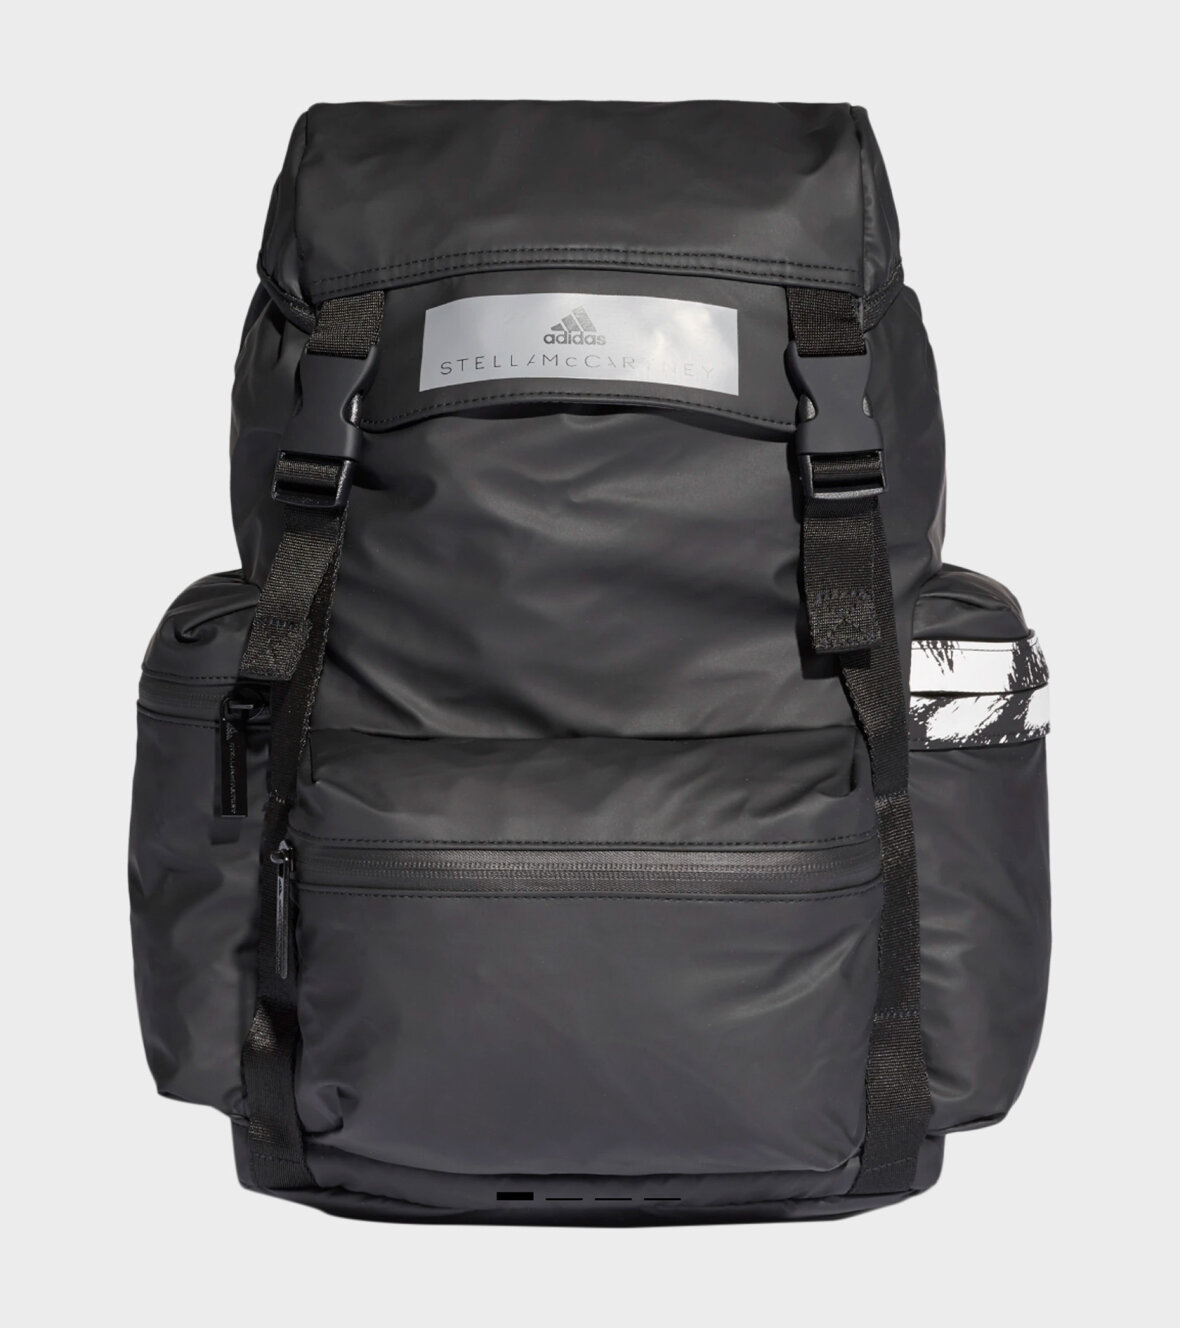 Adams - Accessories Adidas Stella McCartney - Backpack Black/White